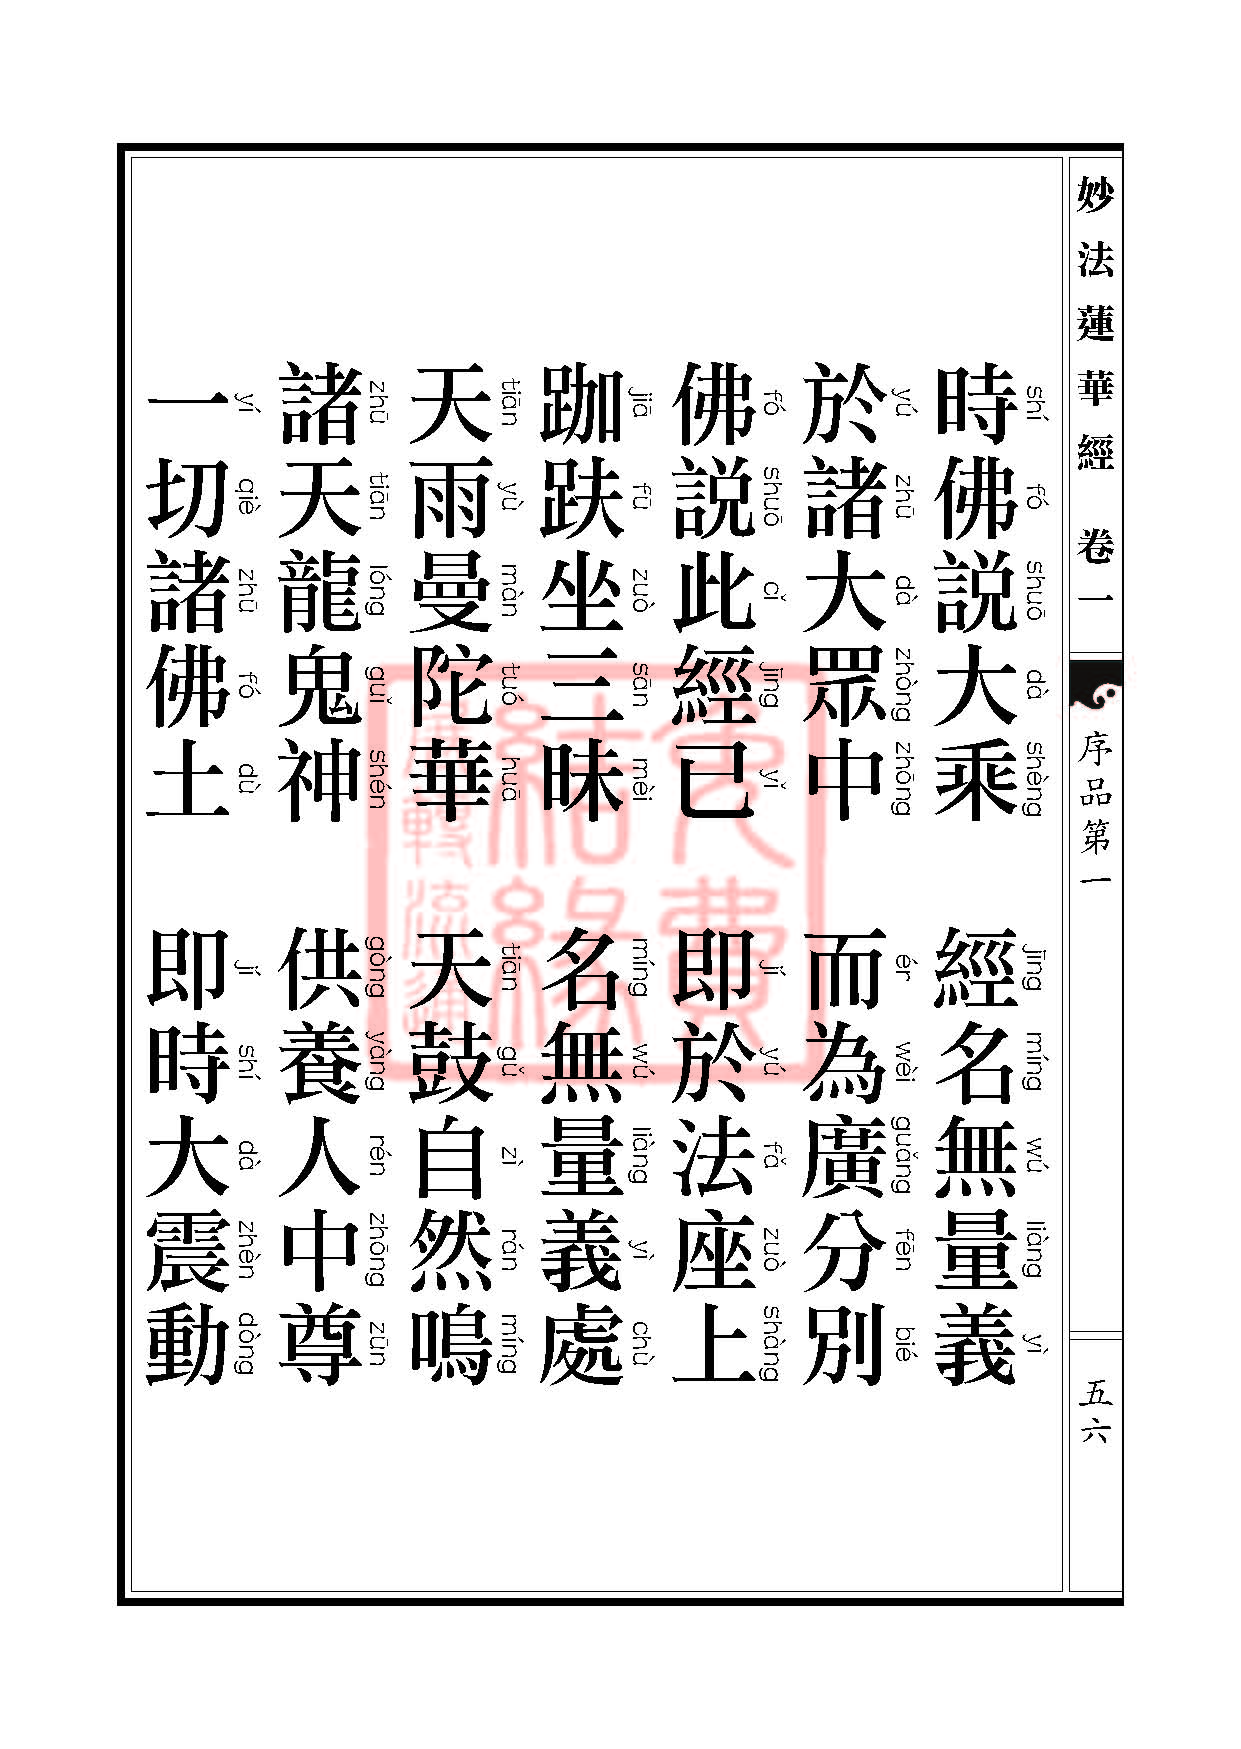 Book_FHJ_HK-A6-PY_Web_ҳ_056.jpg